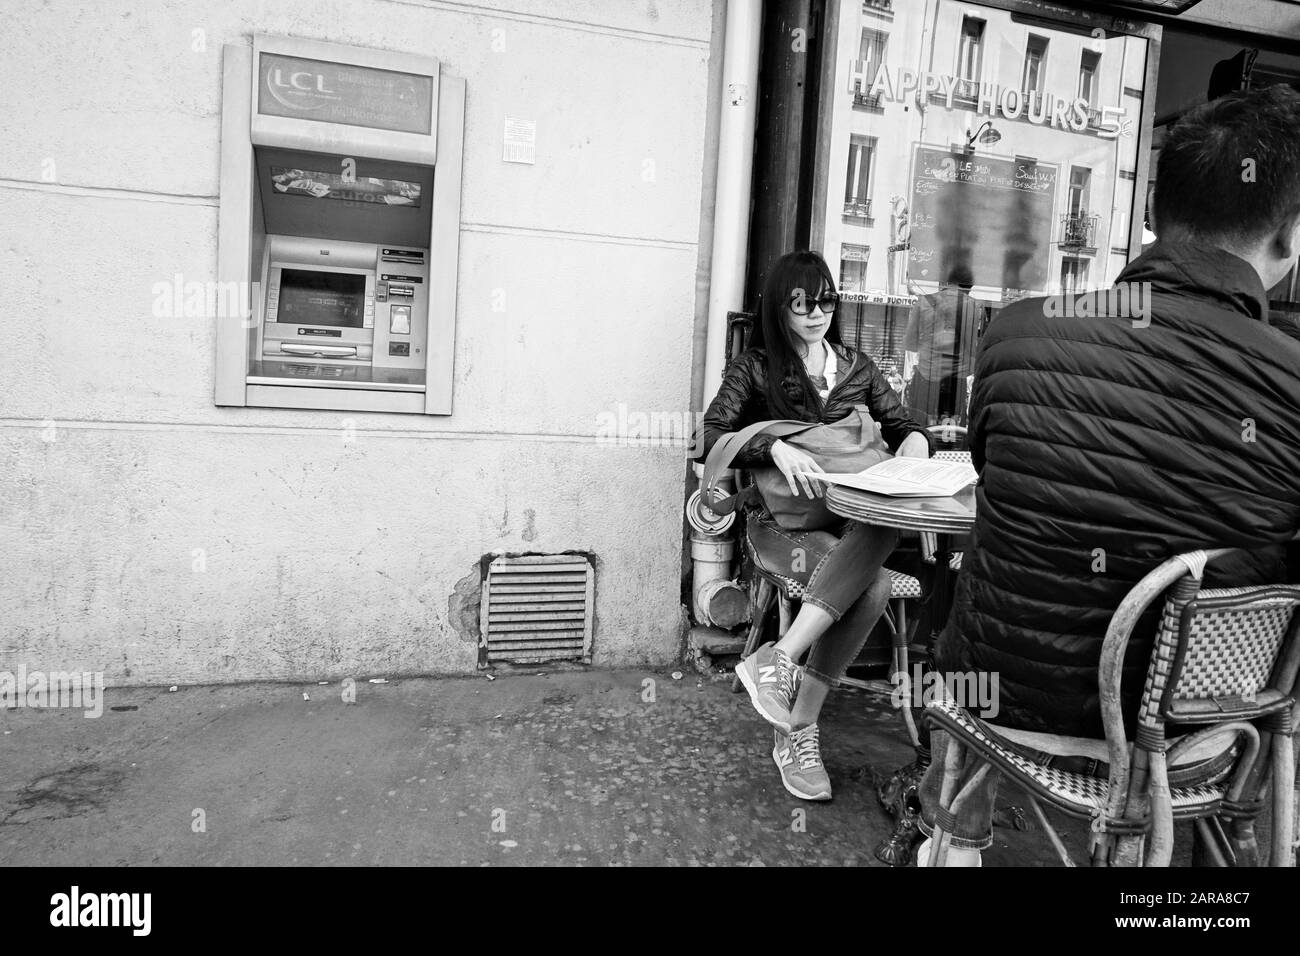 LCL ATM, automatica Teller Machine, Cafe on Pavement, Parigi, Francia, Europa Foto Stock